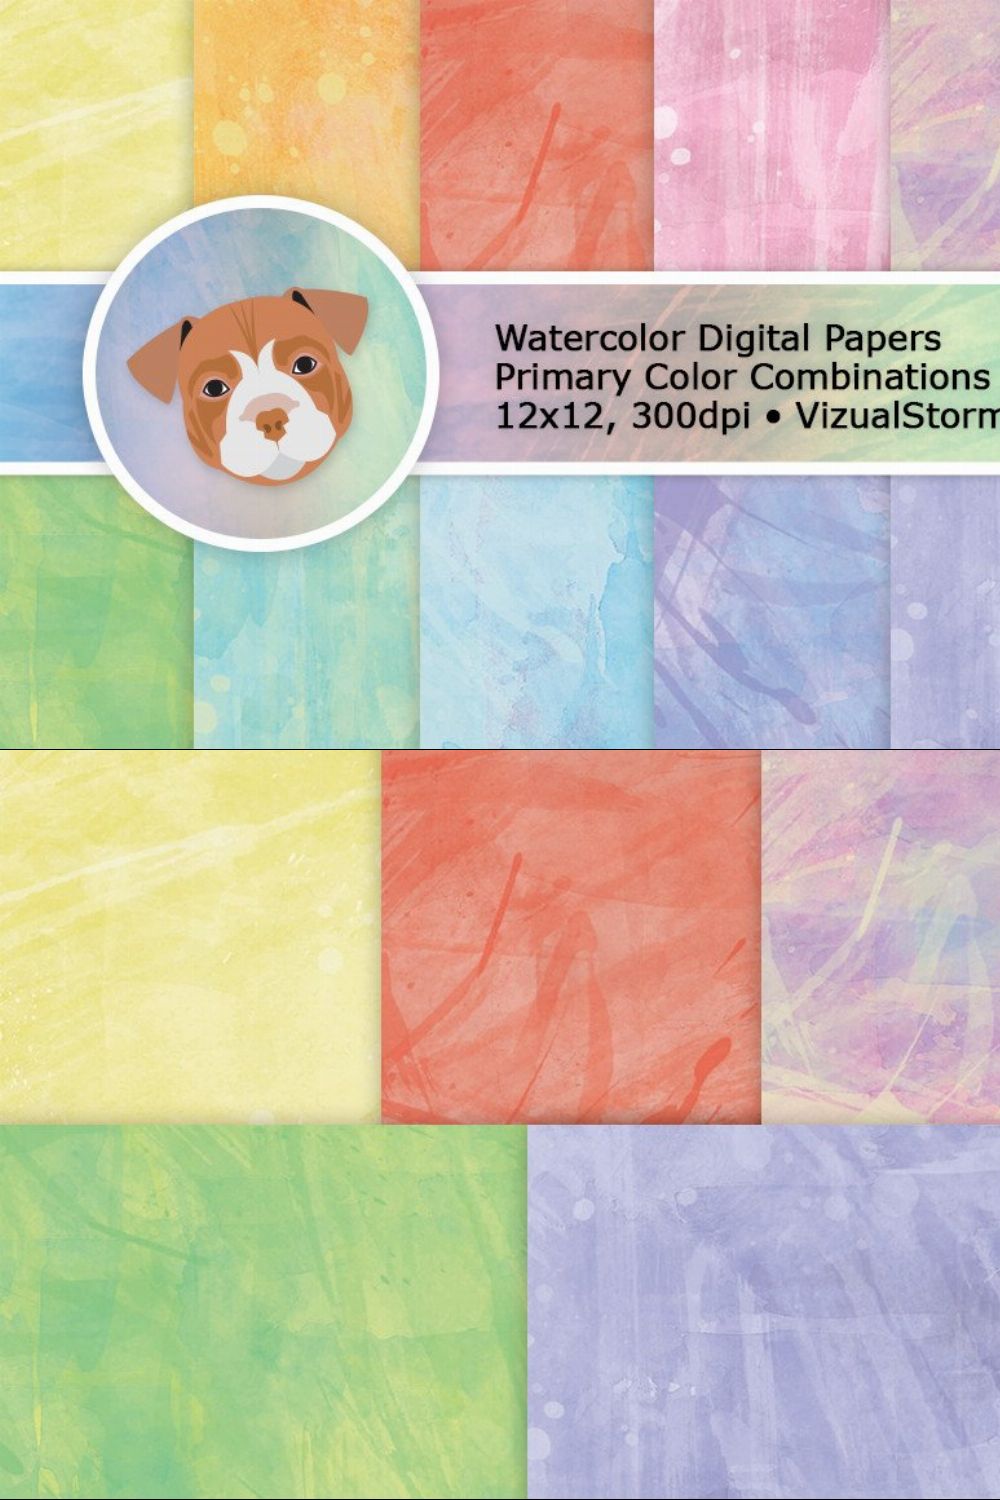 Rainbow Watercolor Digital Patterns pinterest preview image.